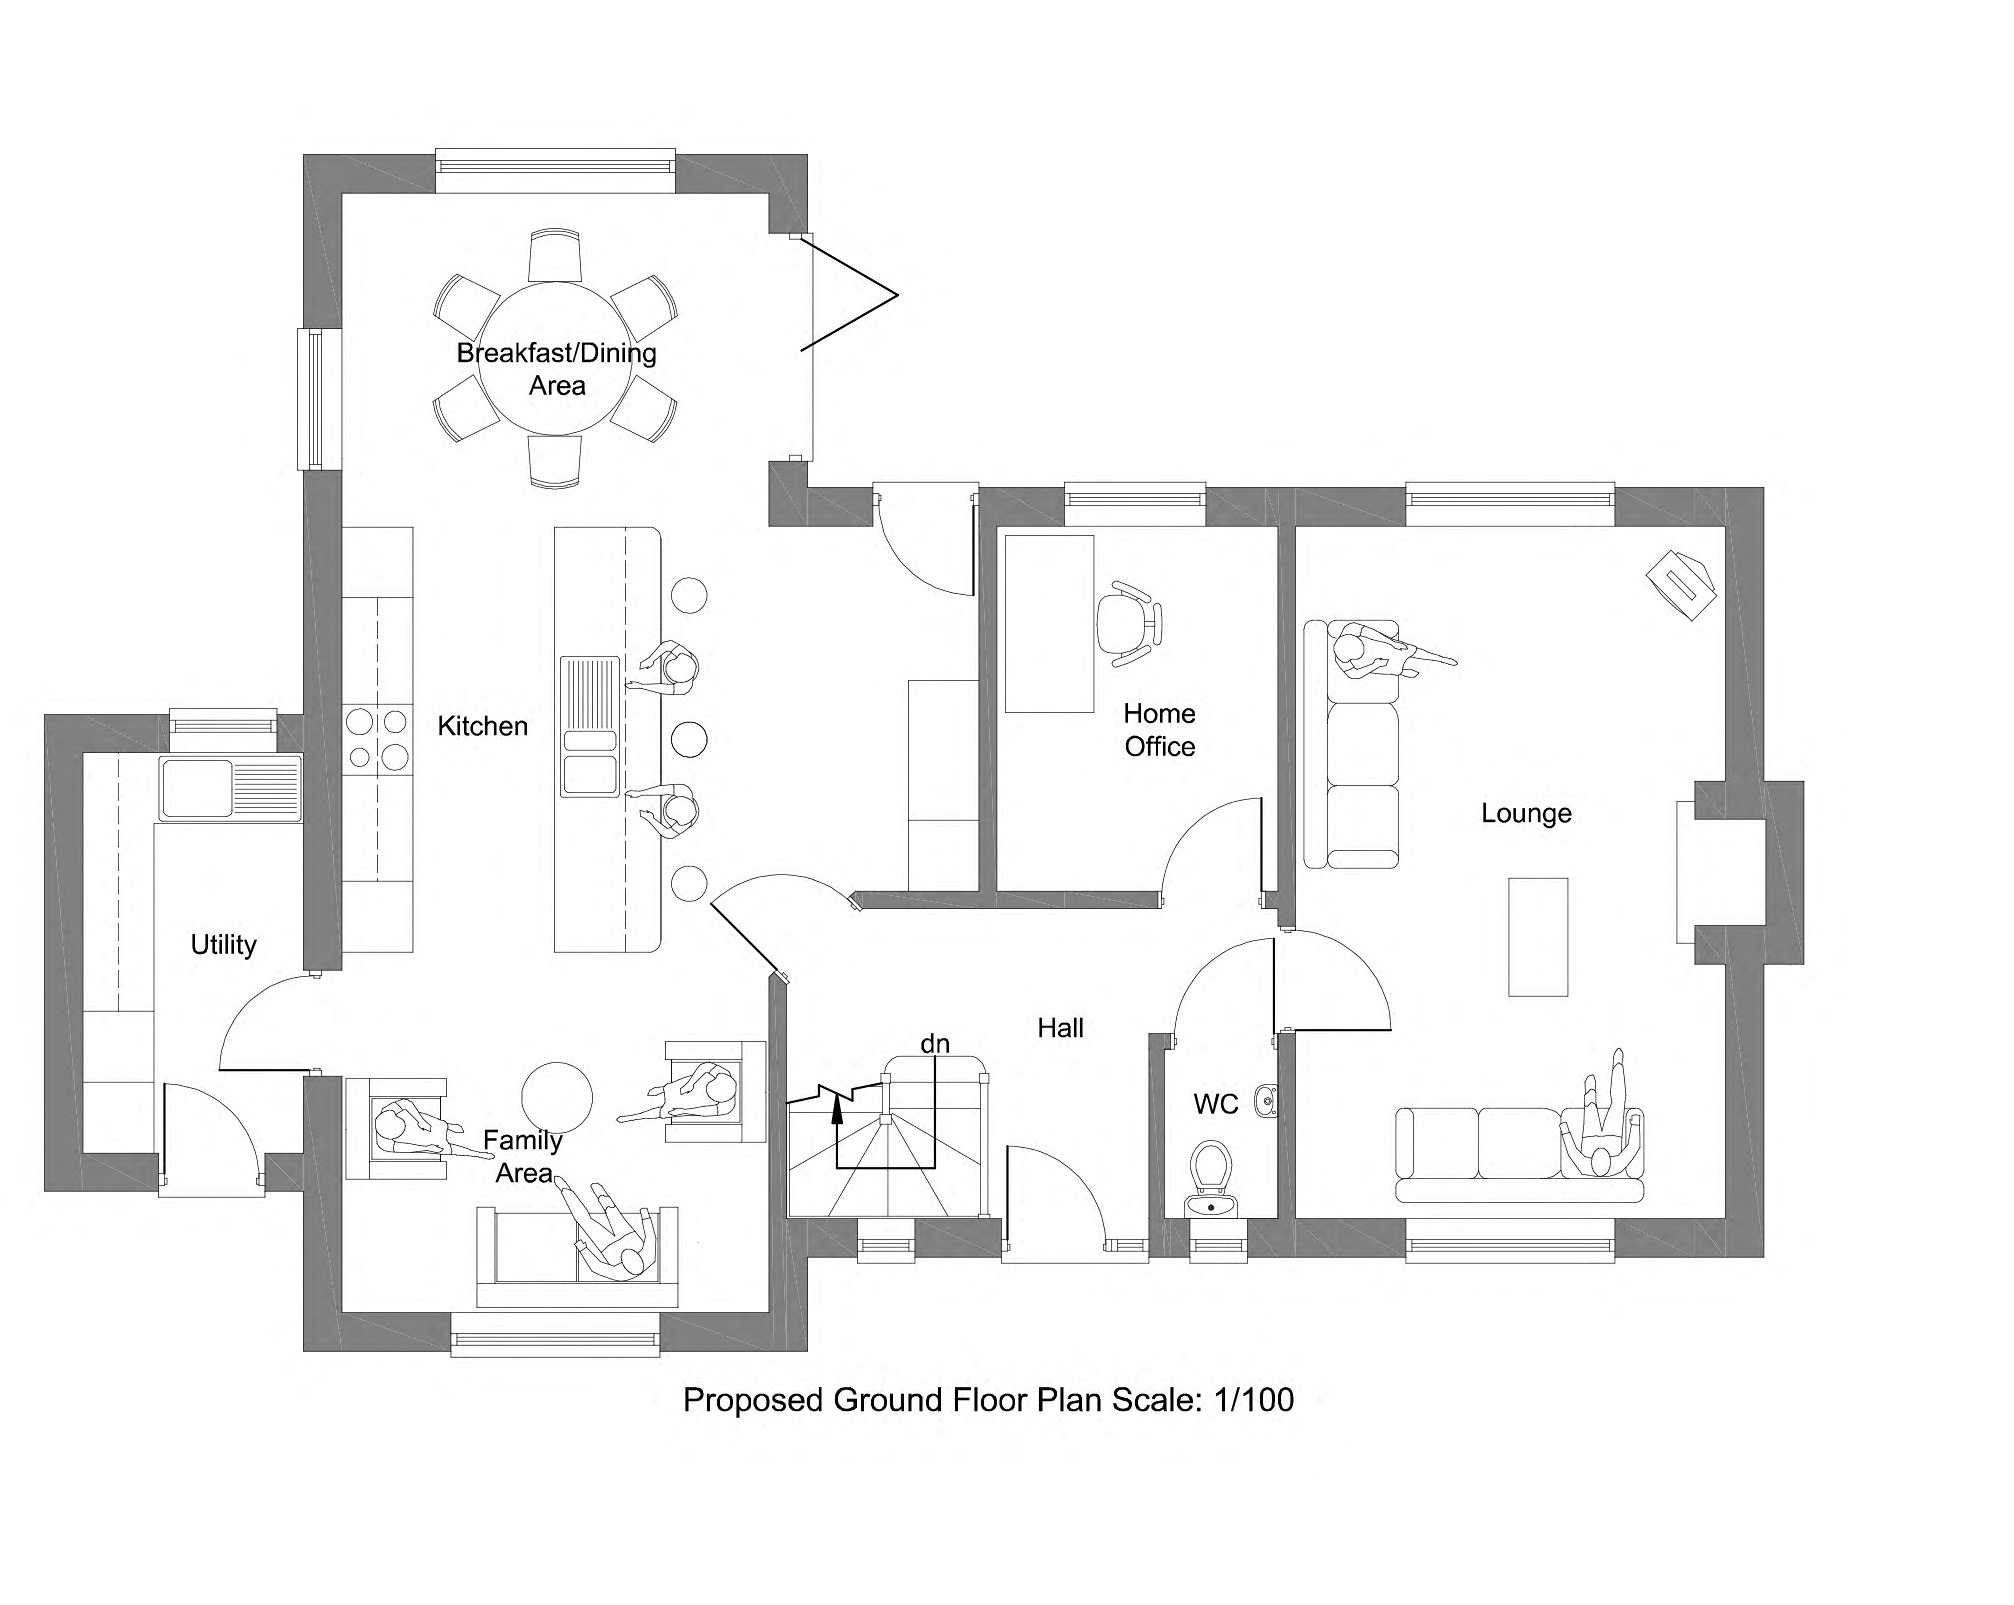 5 bed plot for sale - Property floorplan